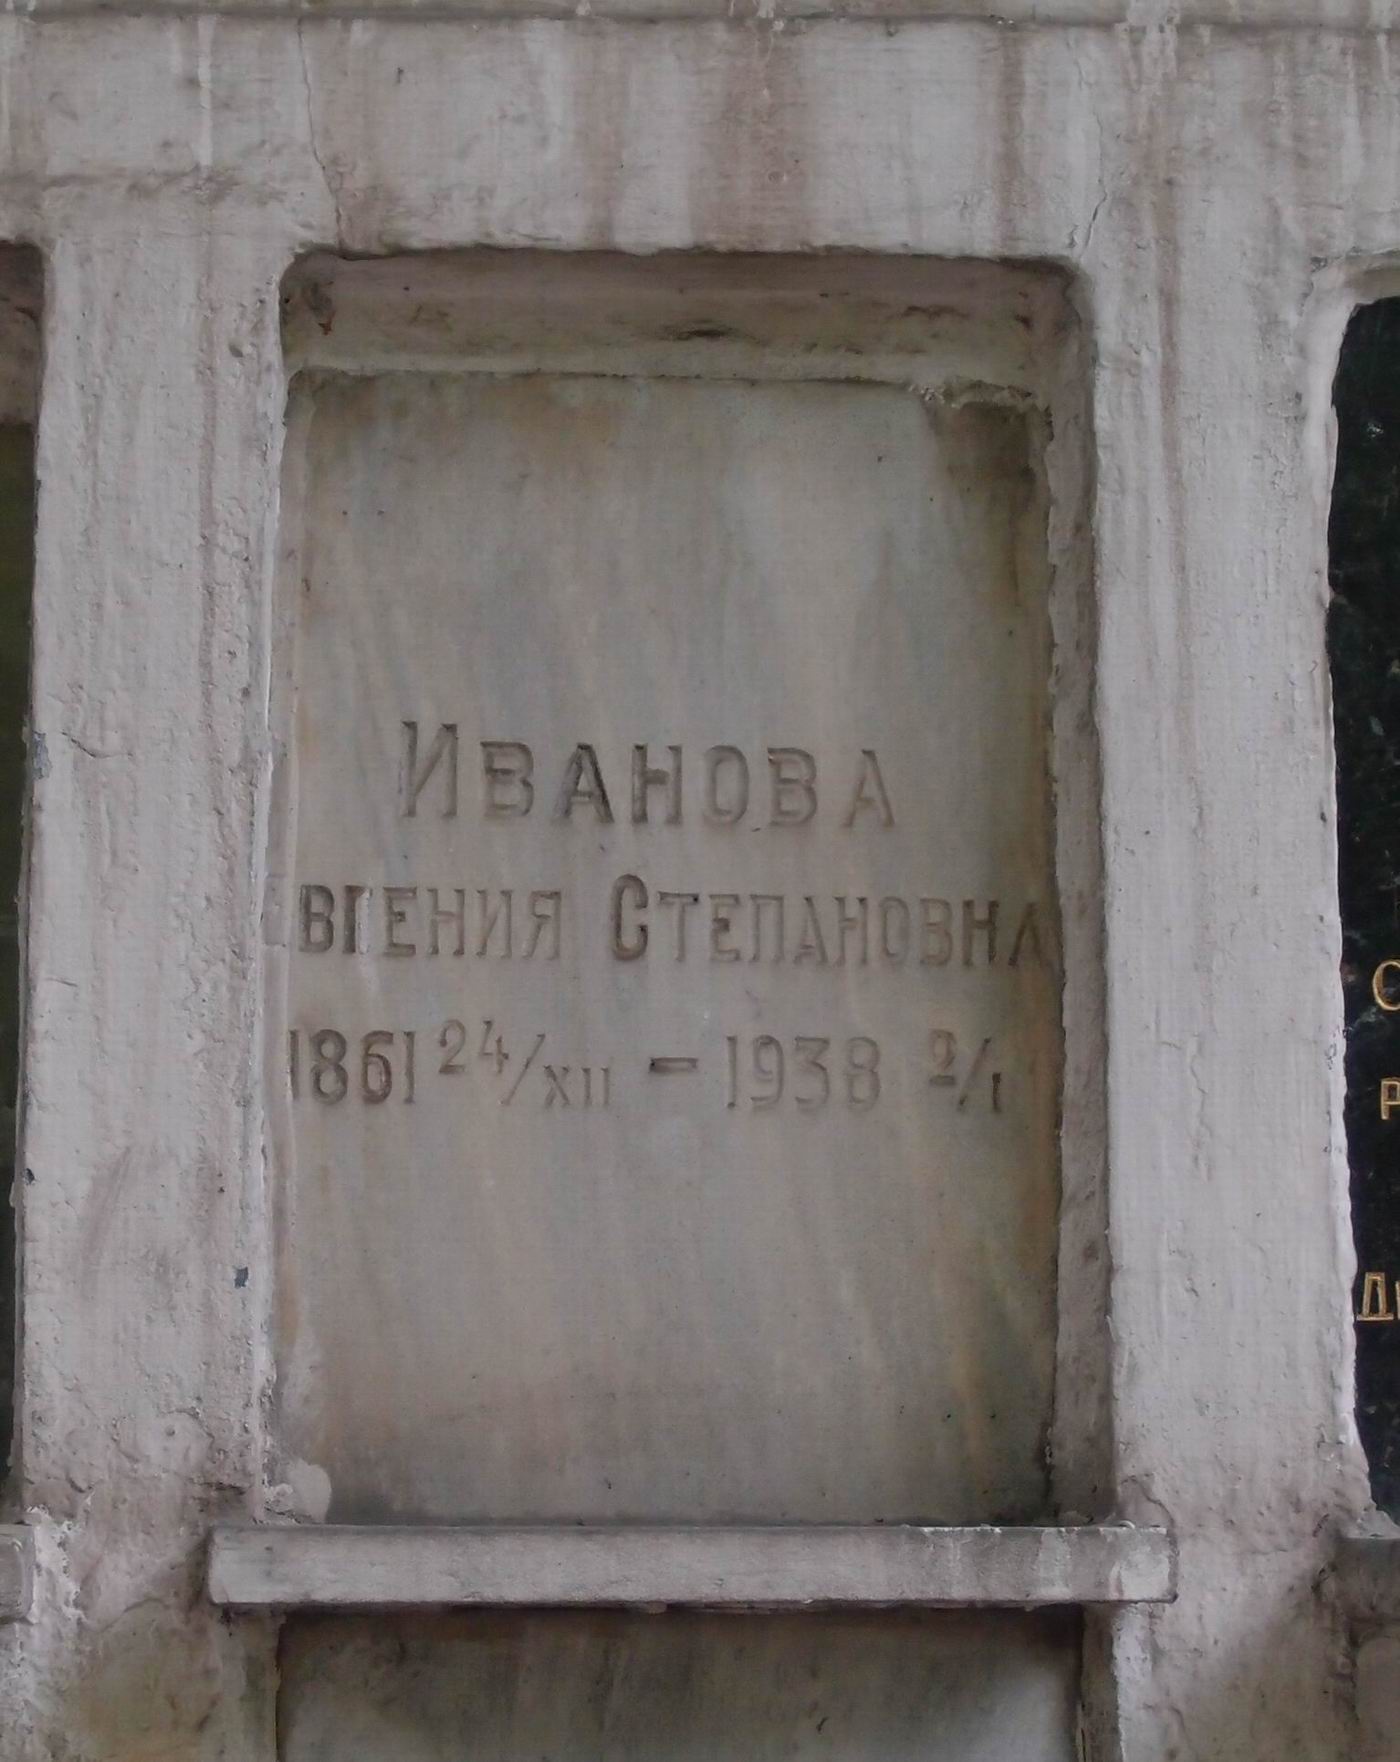 Плита на нише Ивановой Е.С. (1861–1938), на Новодевичьем кладбище (колумбарий [11]–7–1).